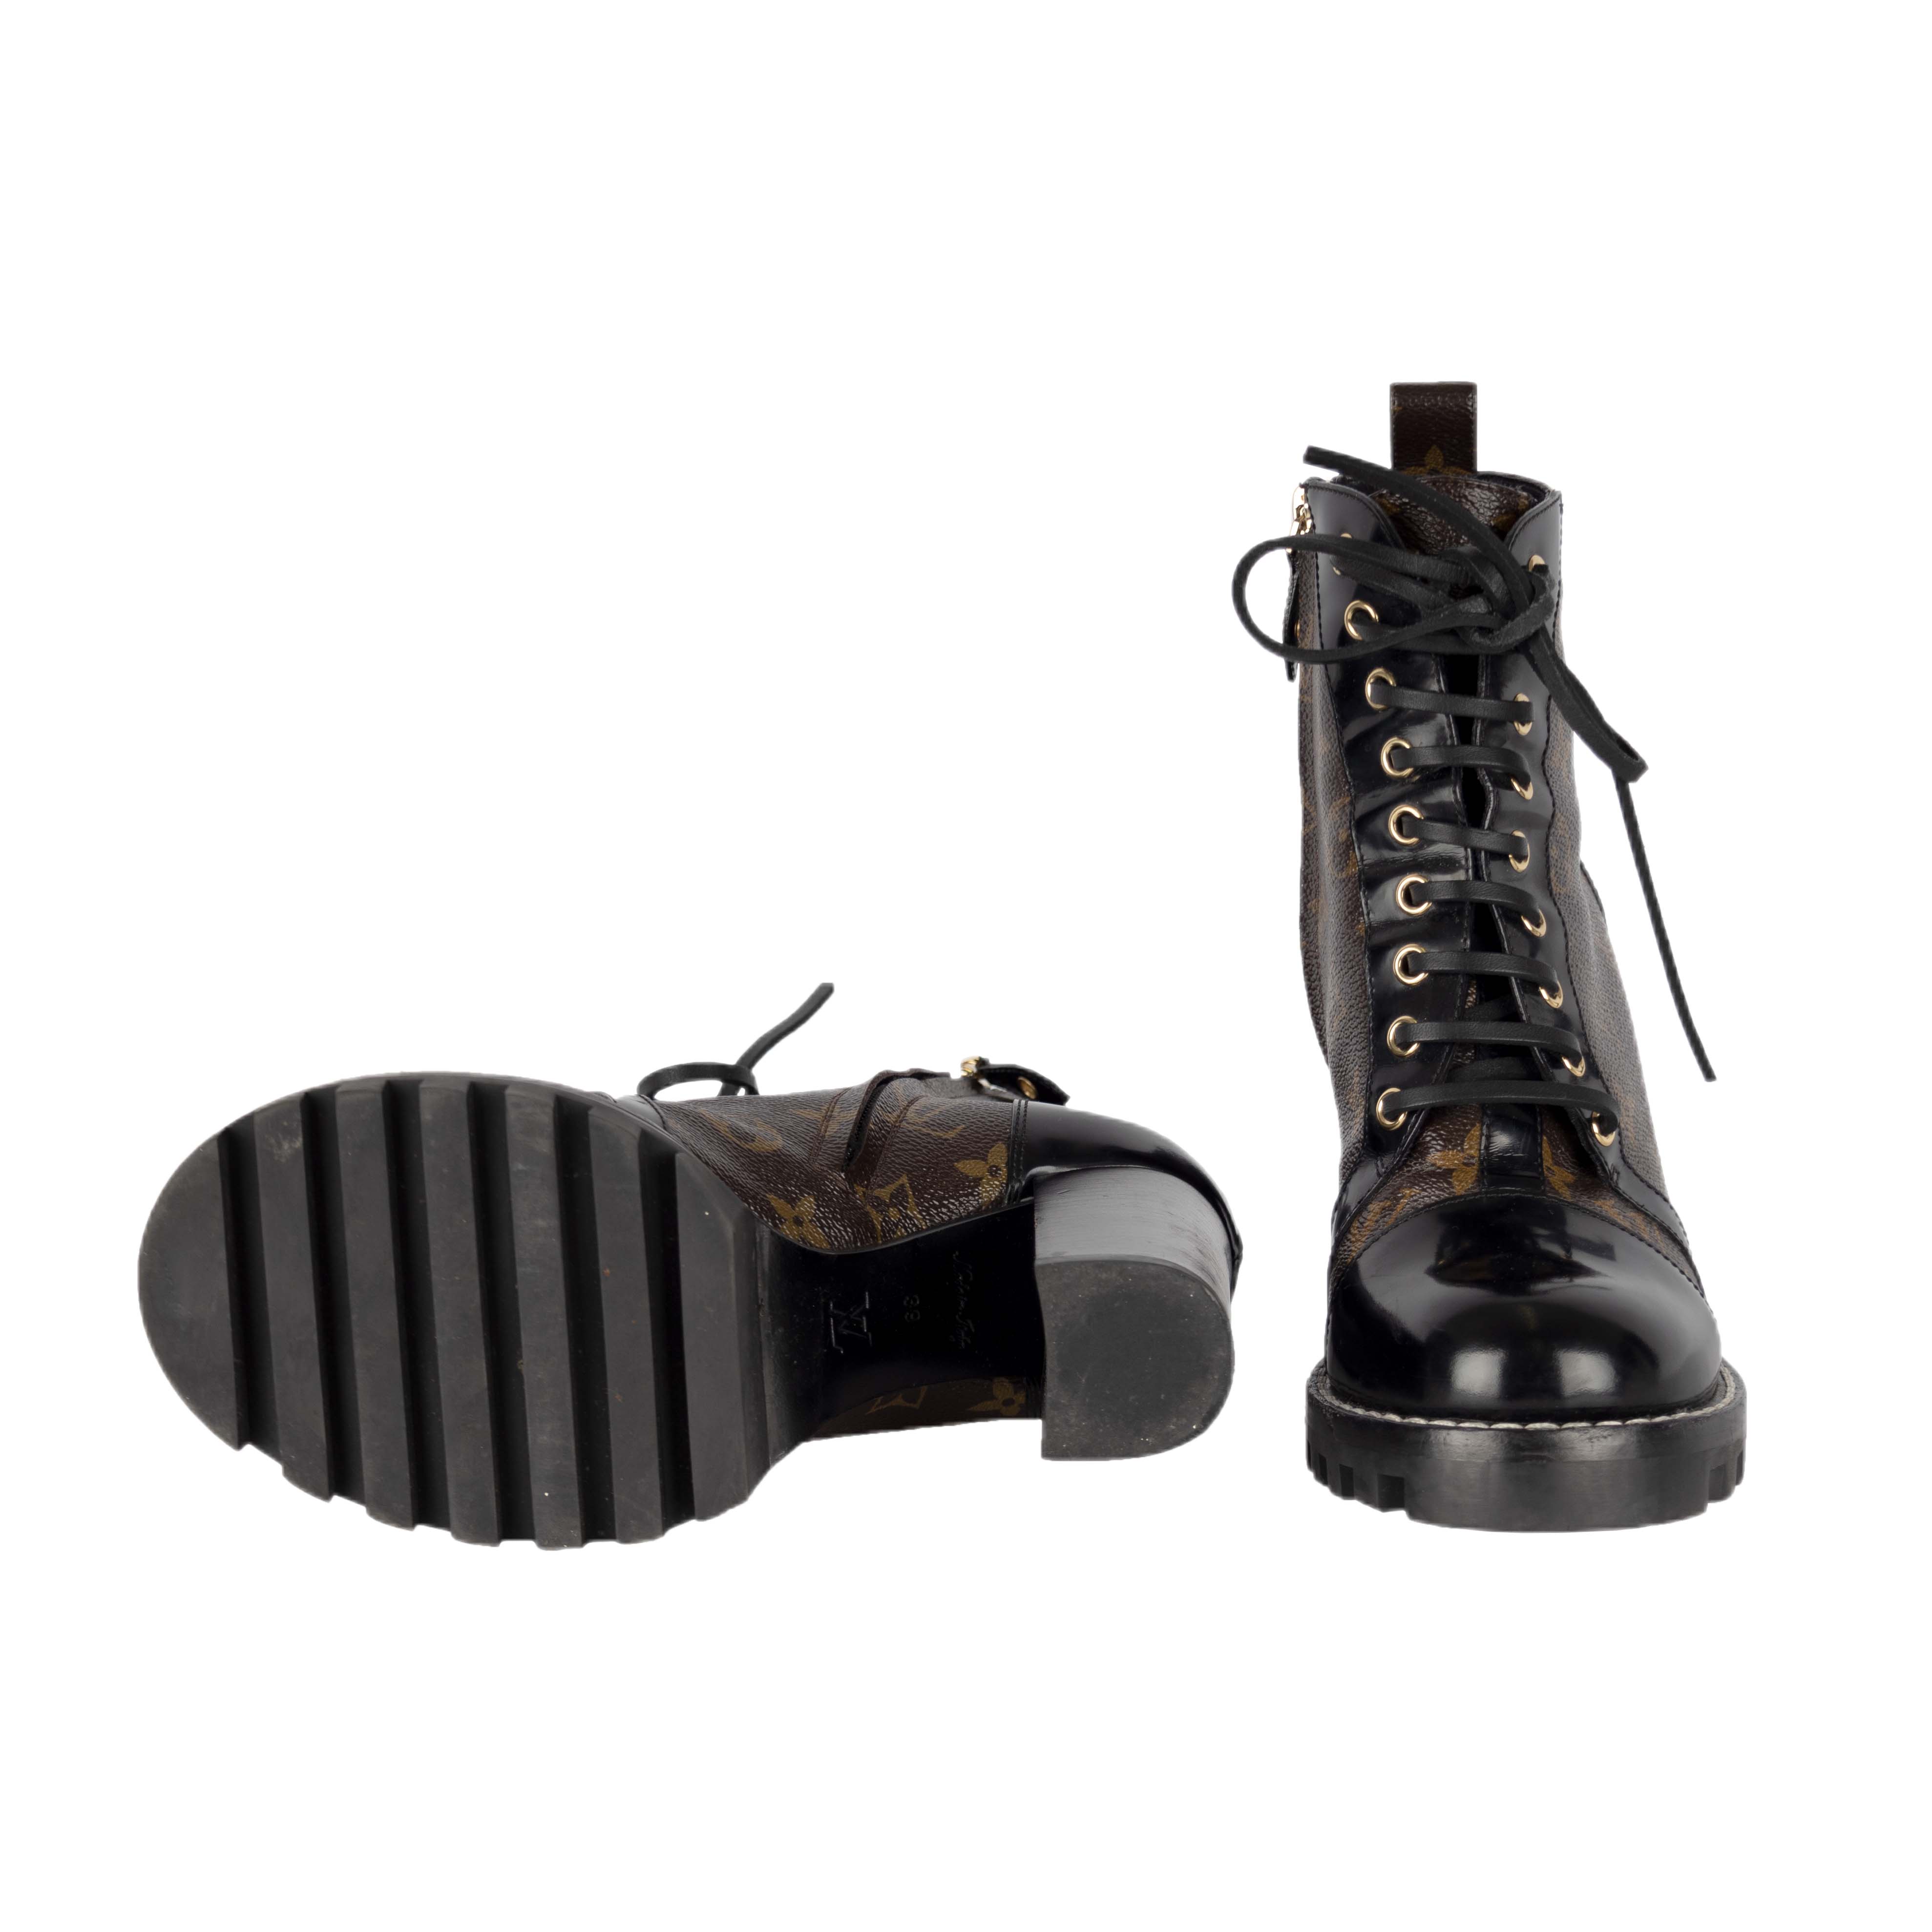 Louis Vuitton Monogram Star Trail Ankle Boots - '20s